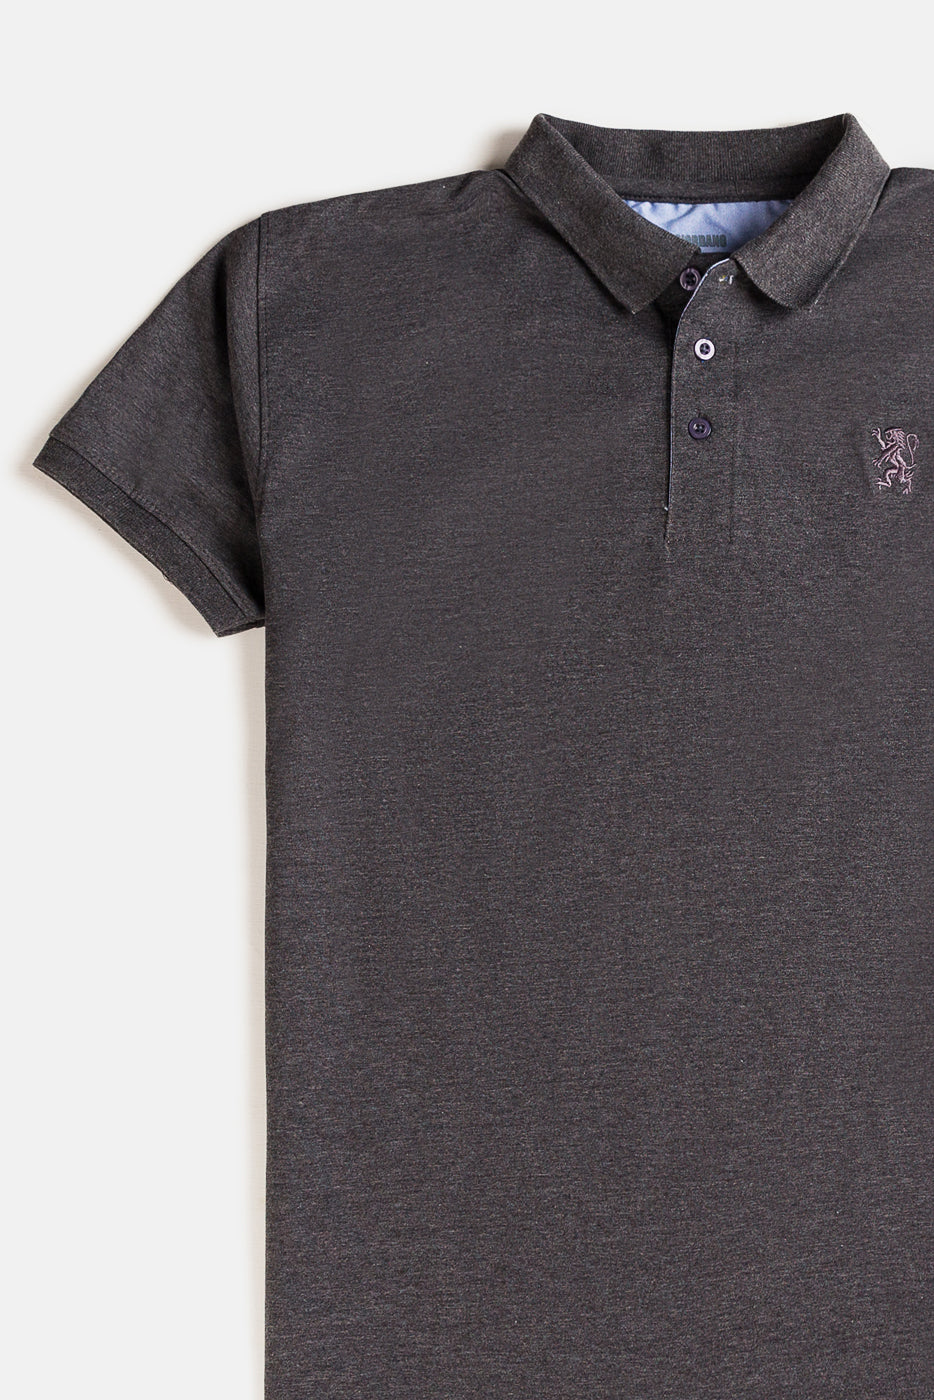 GRDNO Premium Polo Shirt - Charcoal